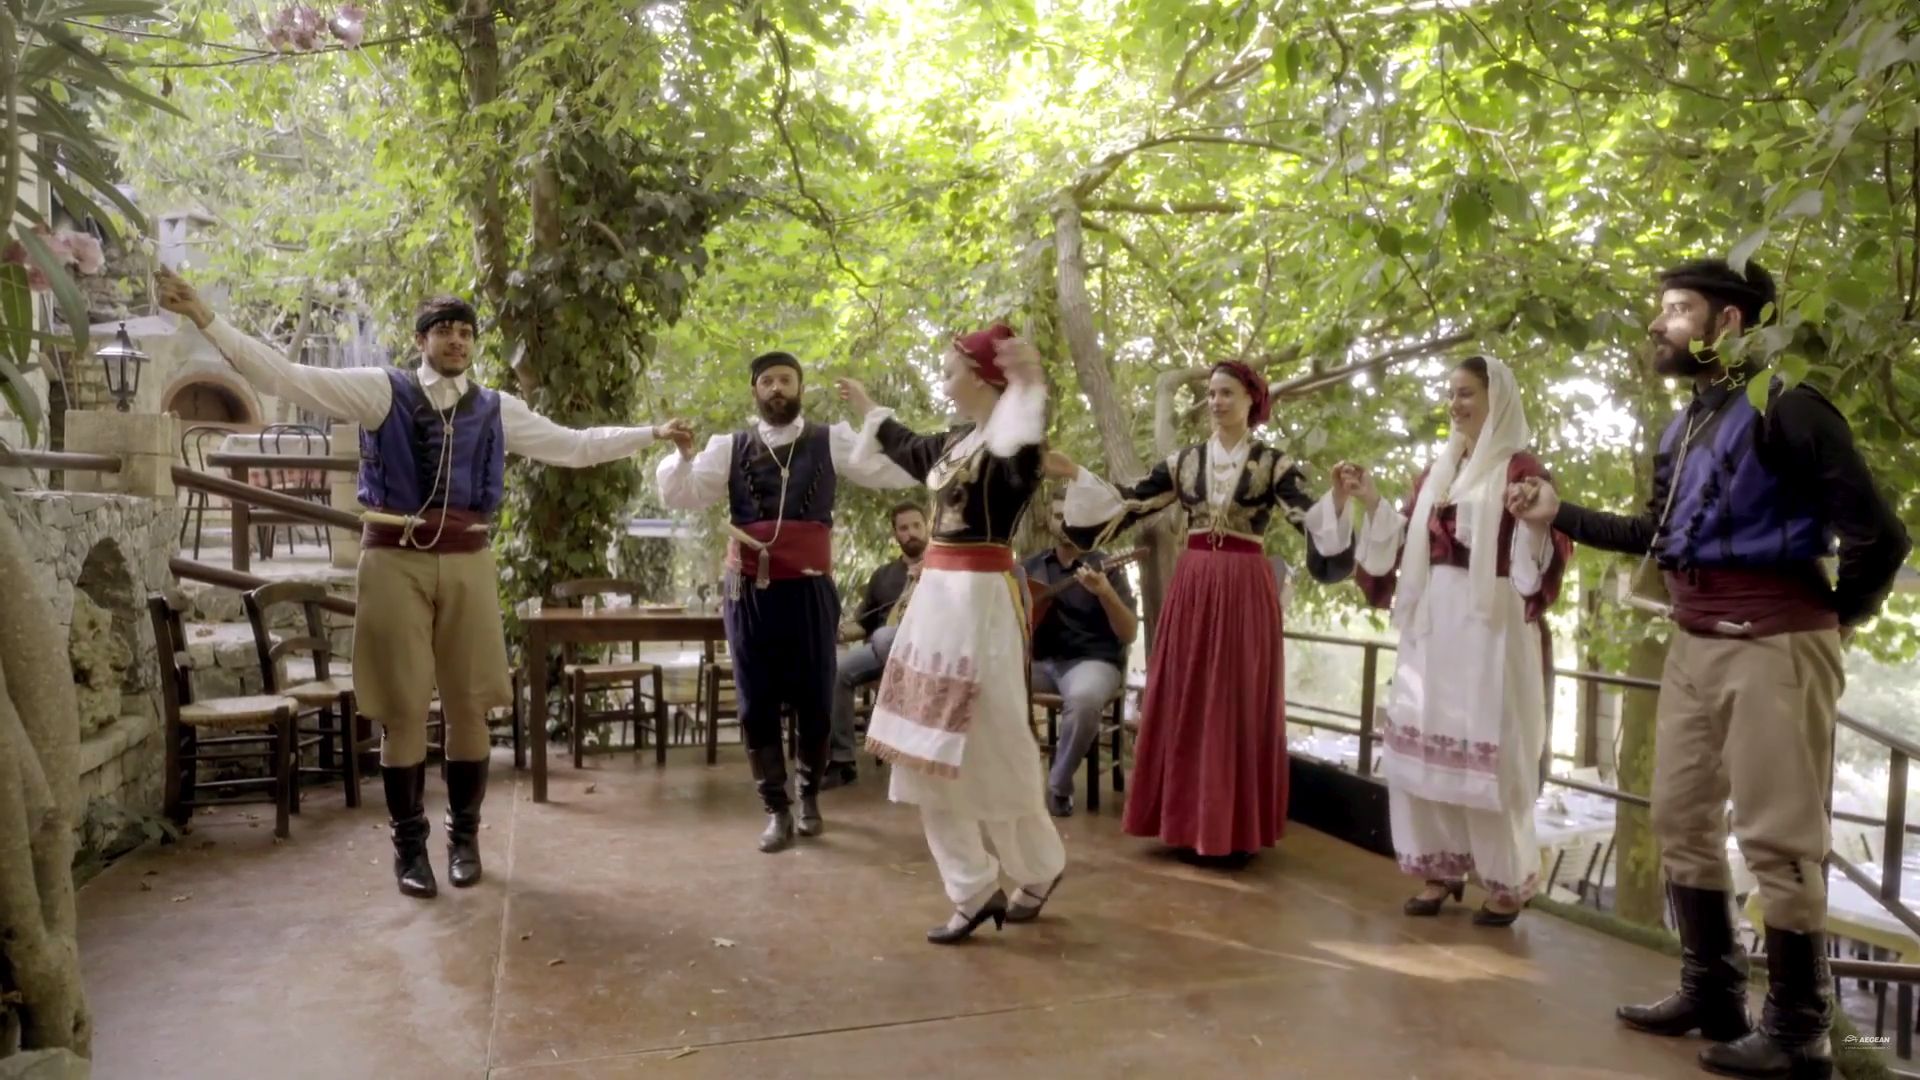 The Folk Costume - Fabulous Crete Blog